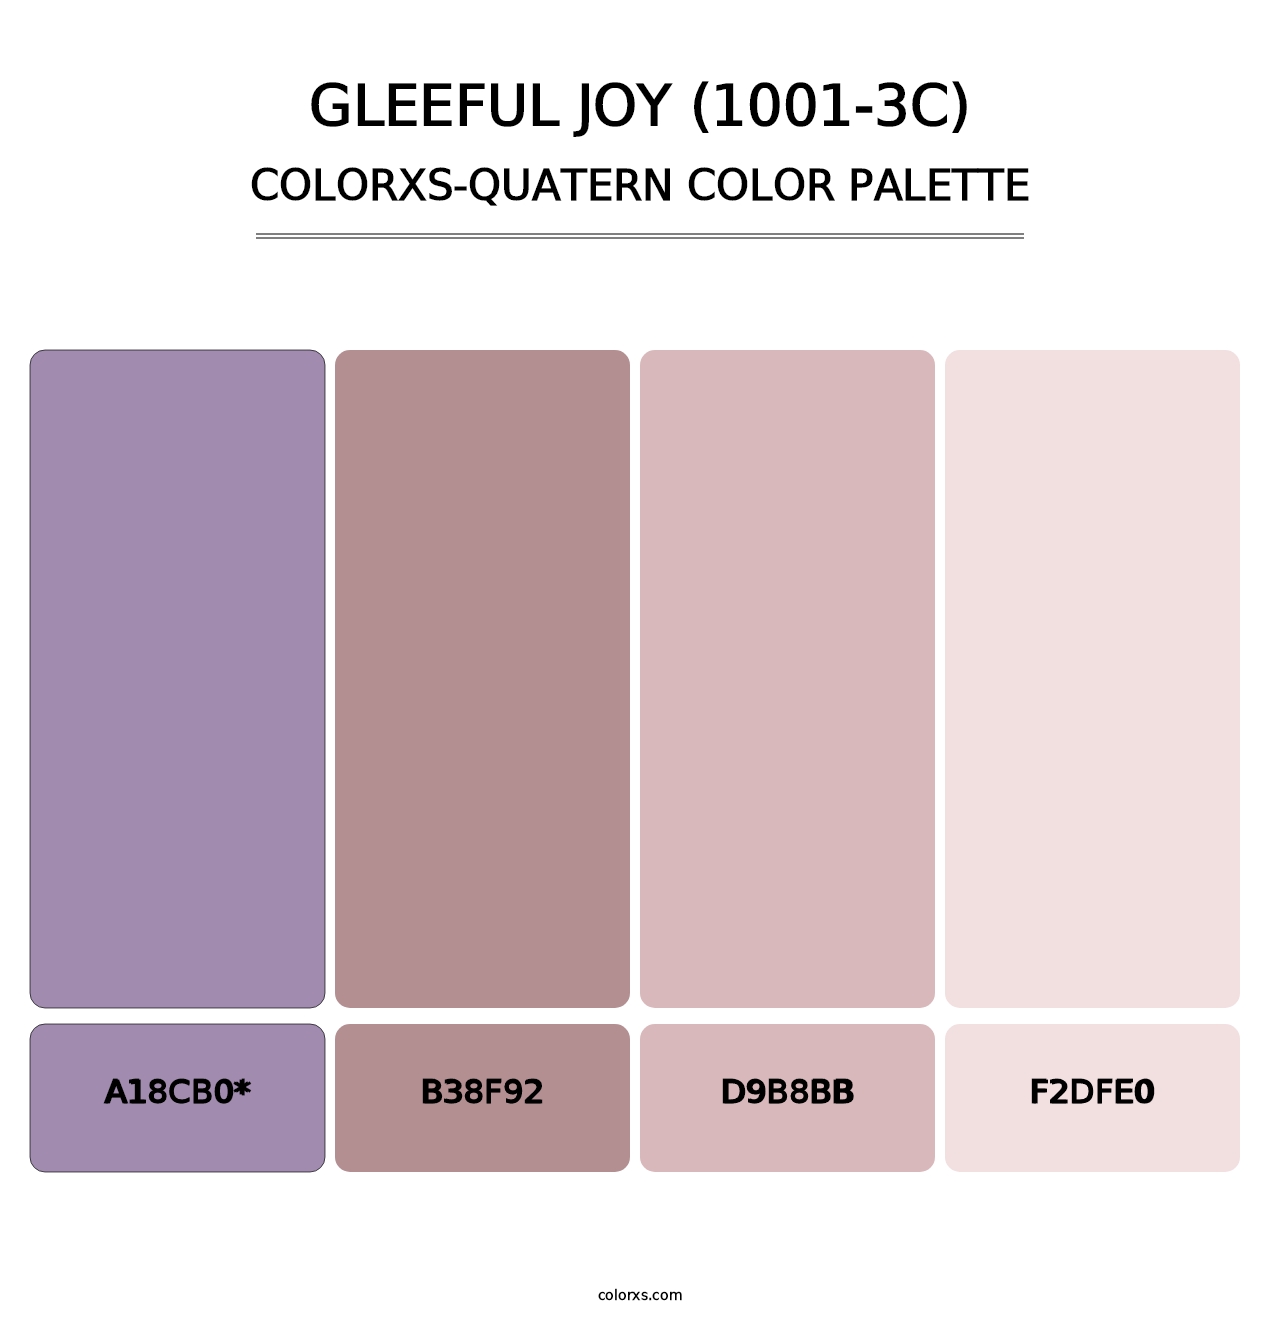 Gleeful Joy (1001-3C) - Colorxs Quatern Palette